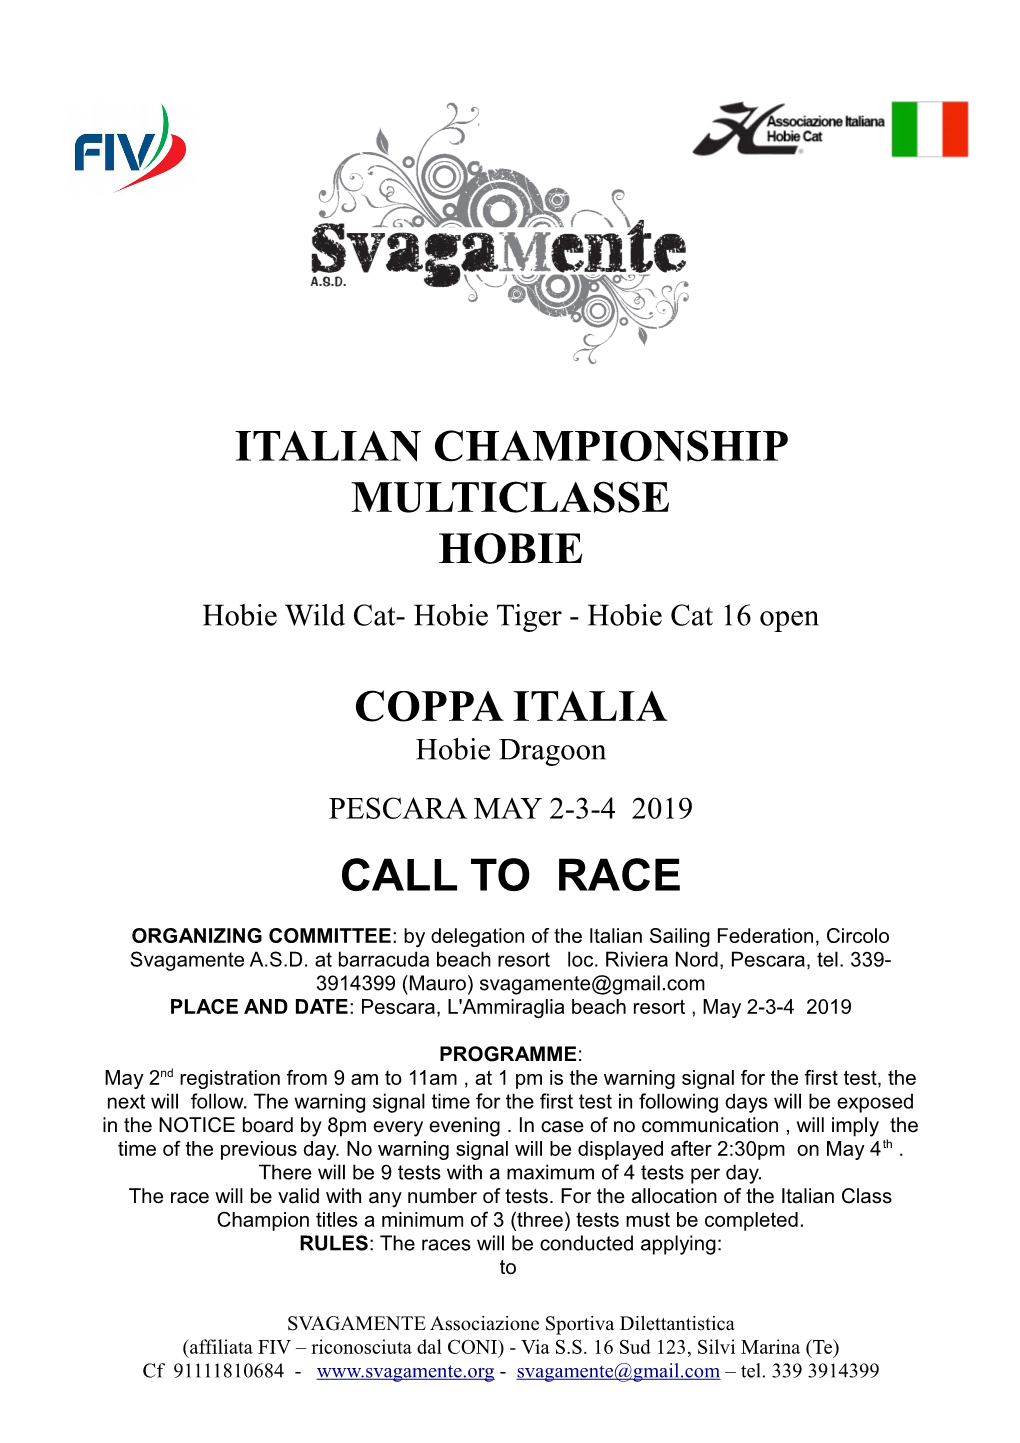 Italian Championship Multiclasse Hobie Coppa